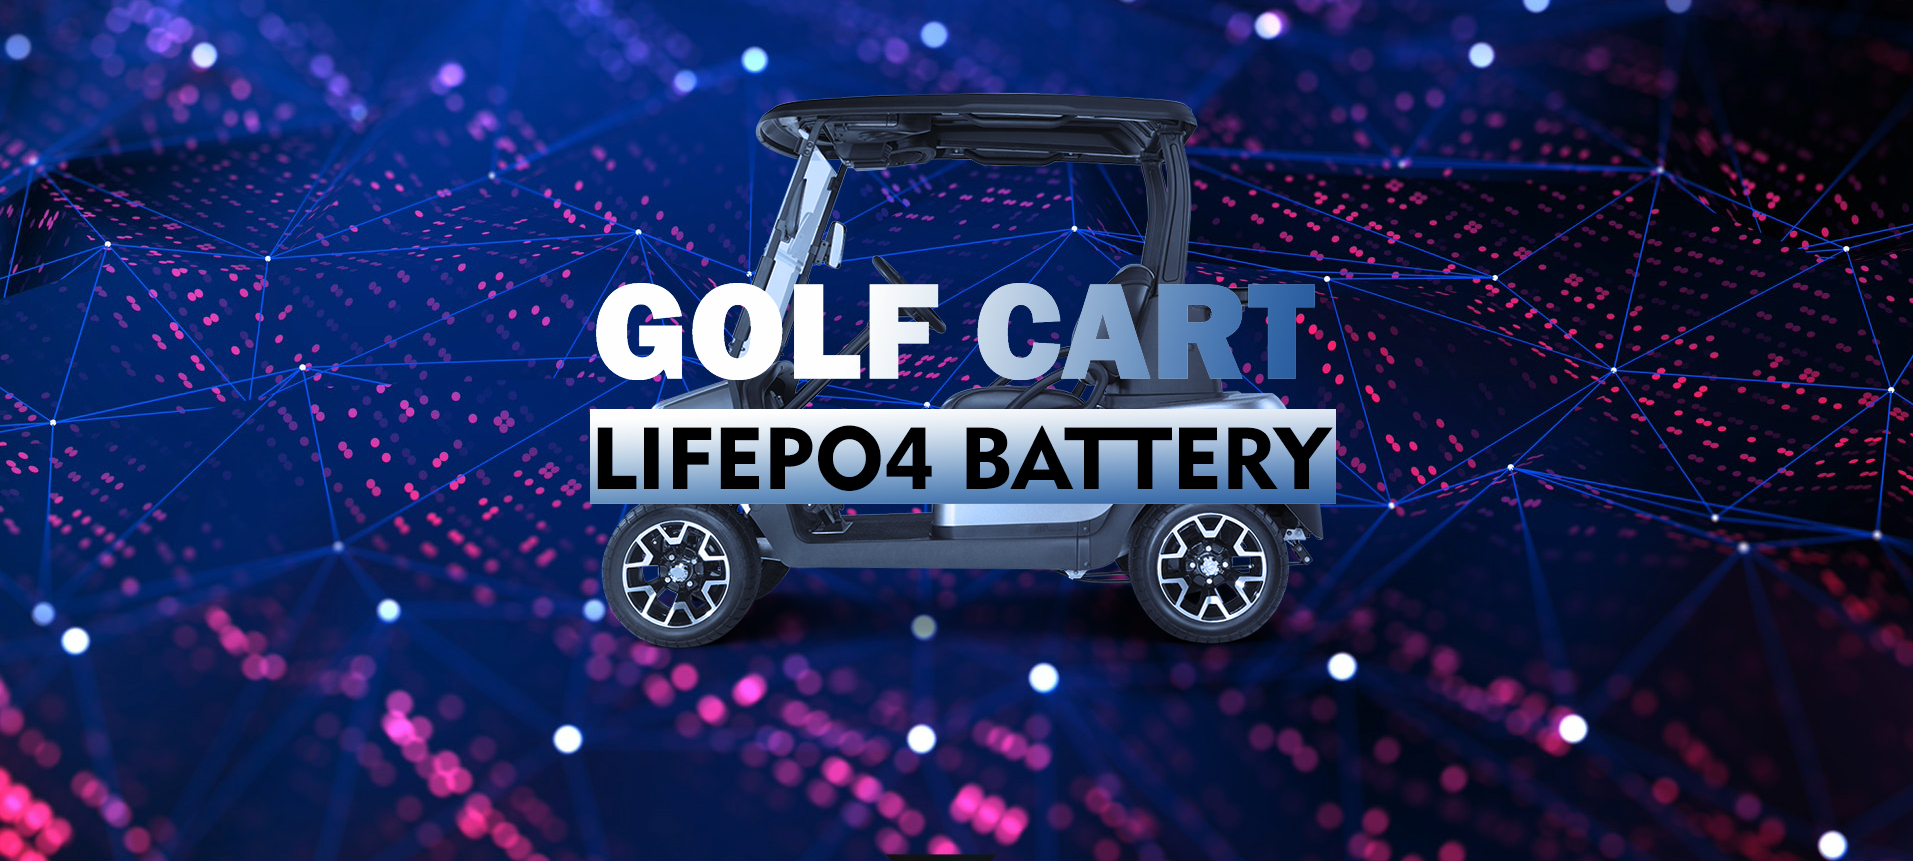 LIFEPO4 Golf Cart Battery 36 V SERIES